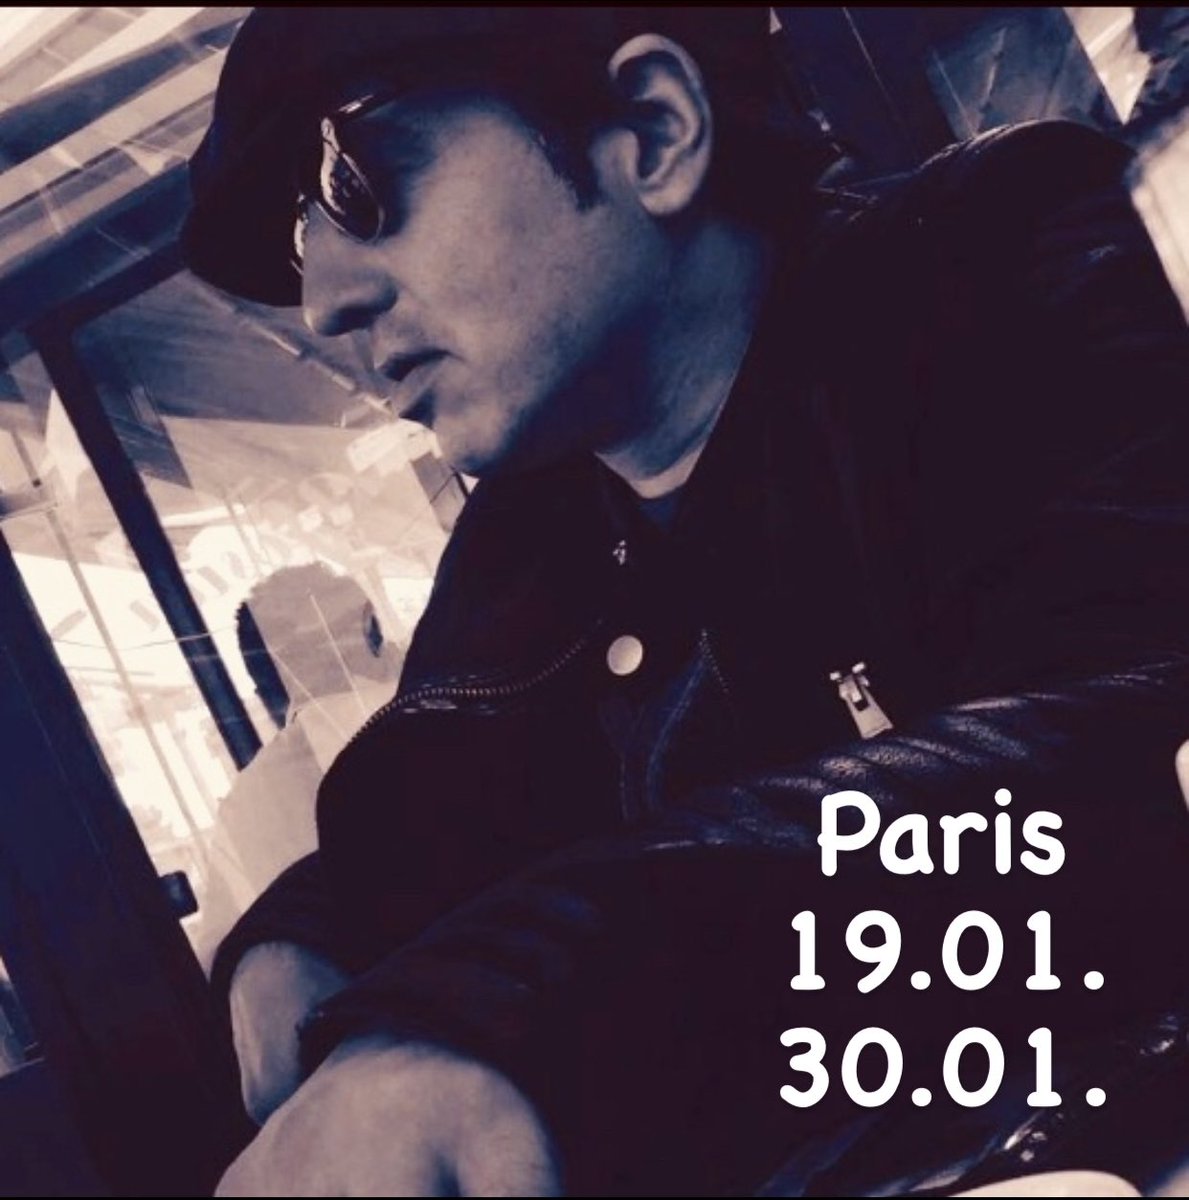 Fazıl Say
Paris Concerts
Theatre des Champs Elysees

19.01.2022 (20.00)
Couperin, Ravel, Debussy, Satie

30.01.(Sunday-matinee;11.00)
Bach “Goldberg Variations”

#fazılsay #paris #theatredeschampselysees
Photo @ecedagistansay